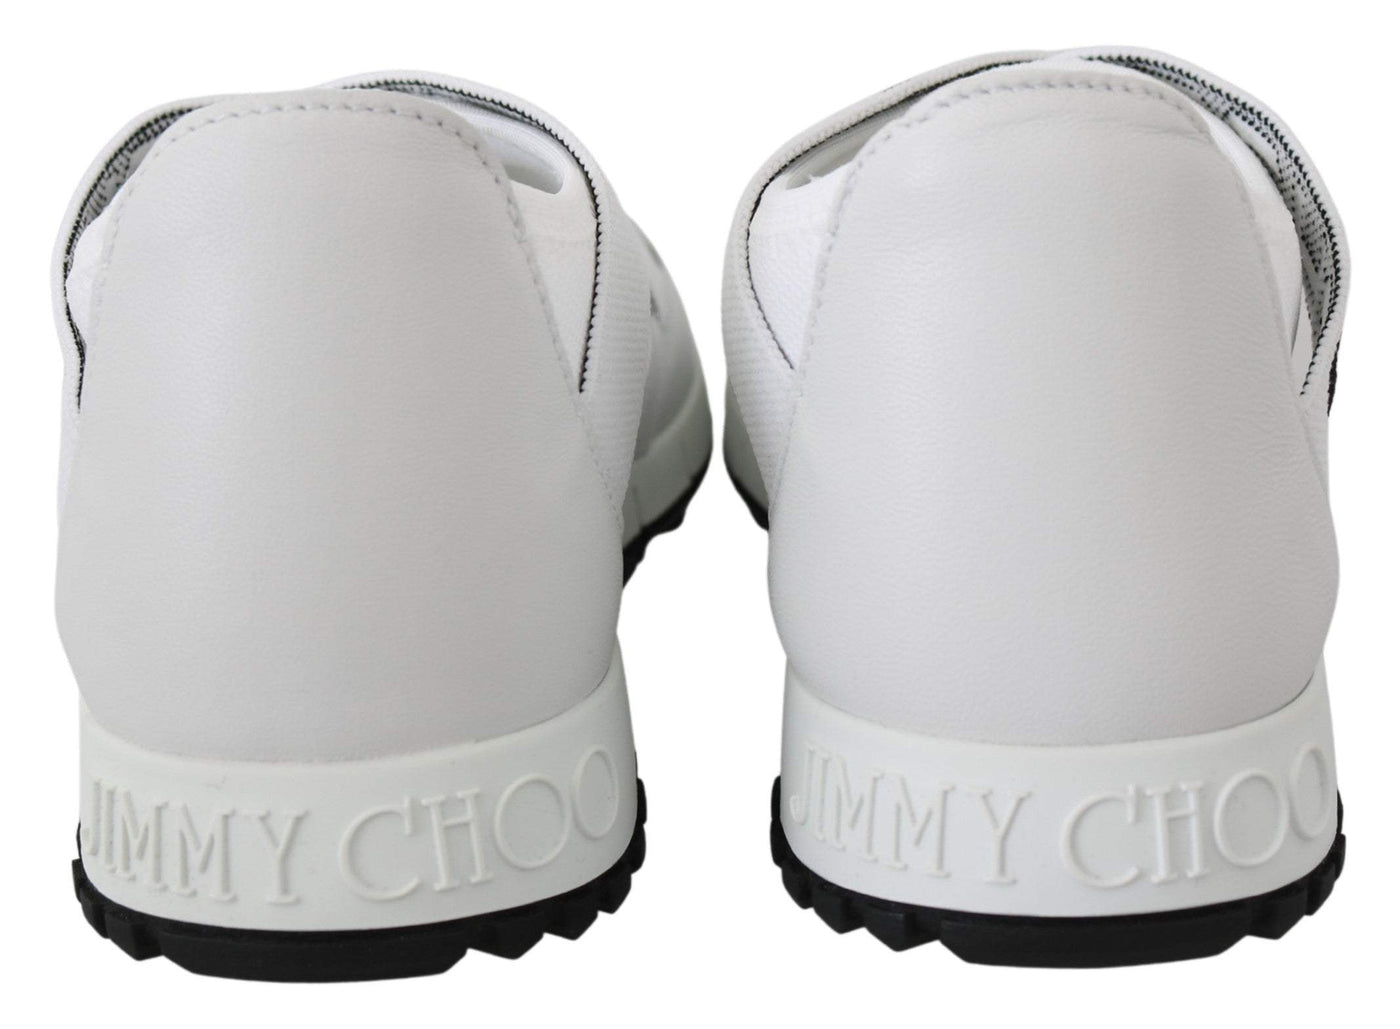 Jimmy Choo Toronto White/Black Nappa/Knit Sneakers Blue and White, EU39.5/US9.5, EU39/US9, feed-1, Jimmy Choo, Shoes - New Arrivals, Sneakers - Women - Shoes at SEYMAYKA